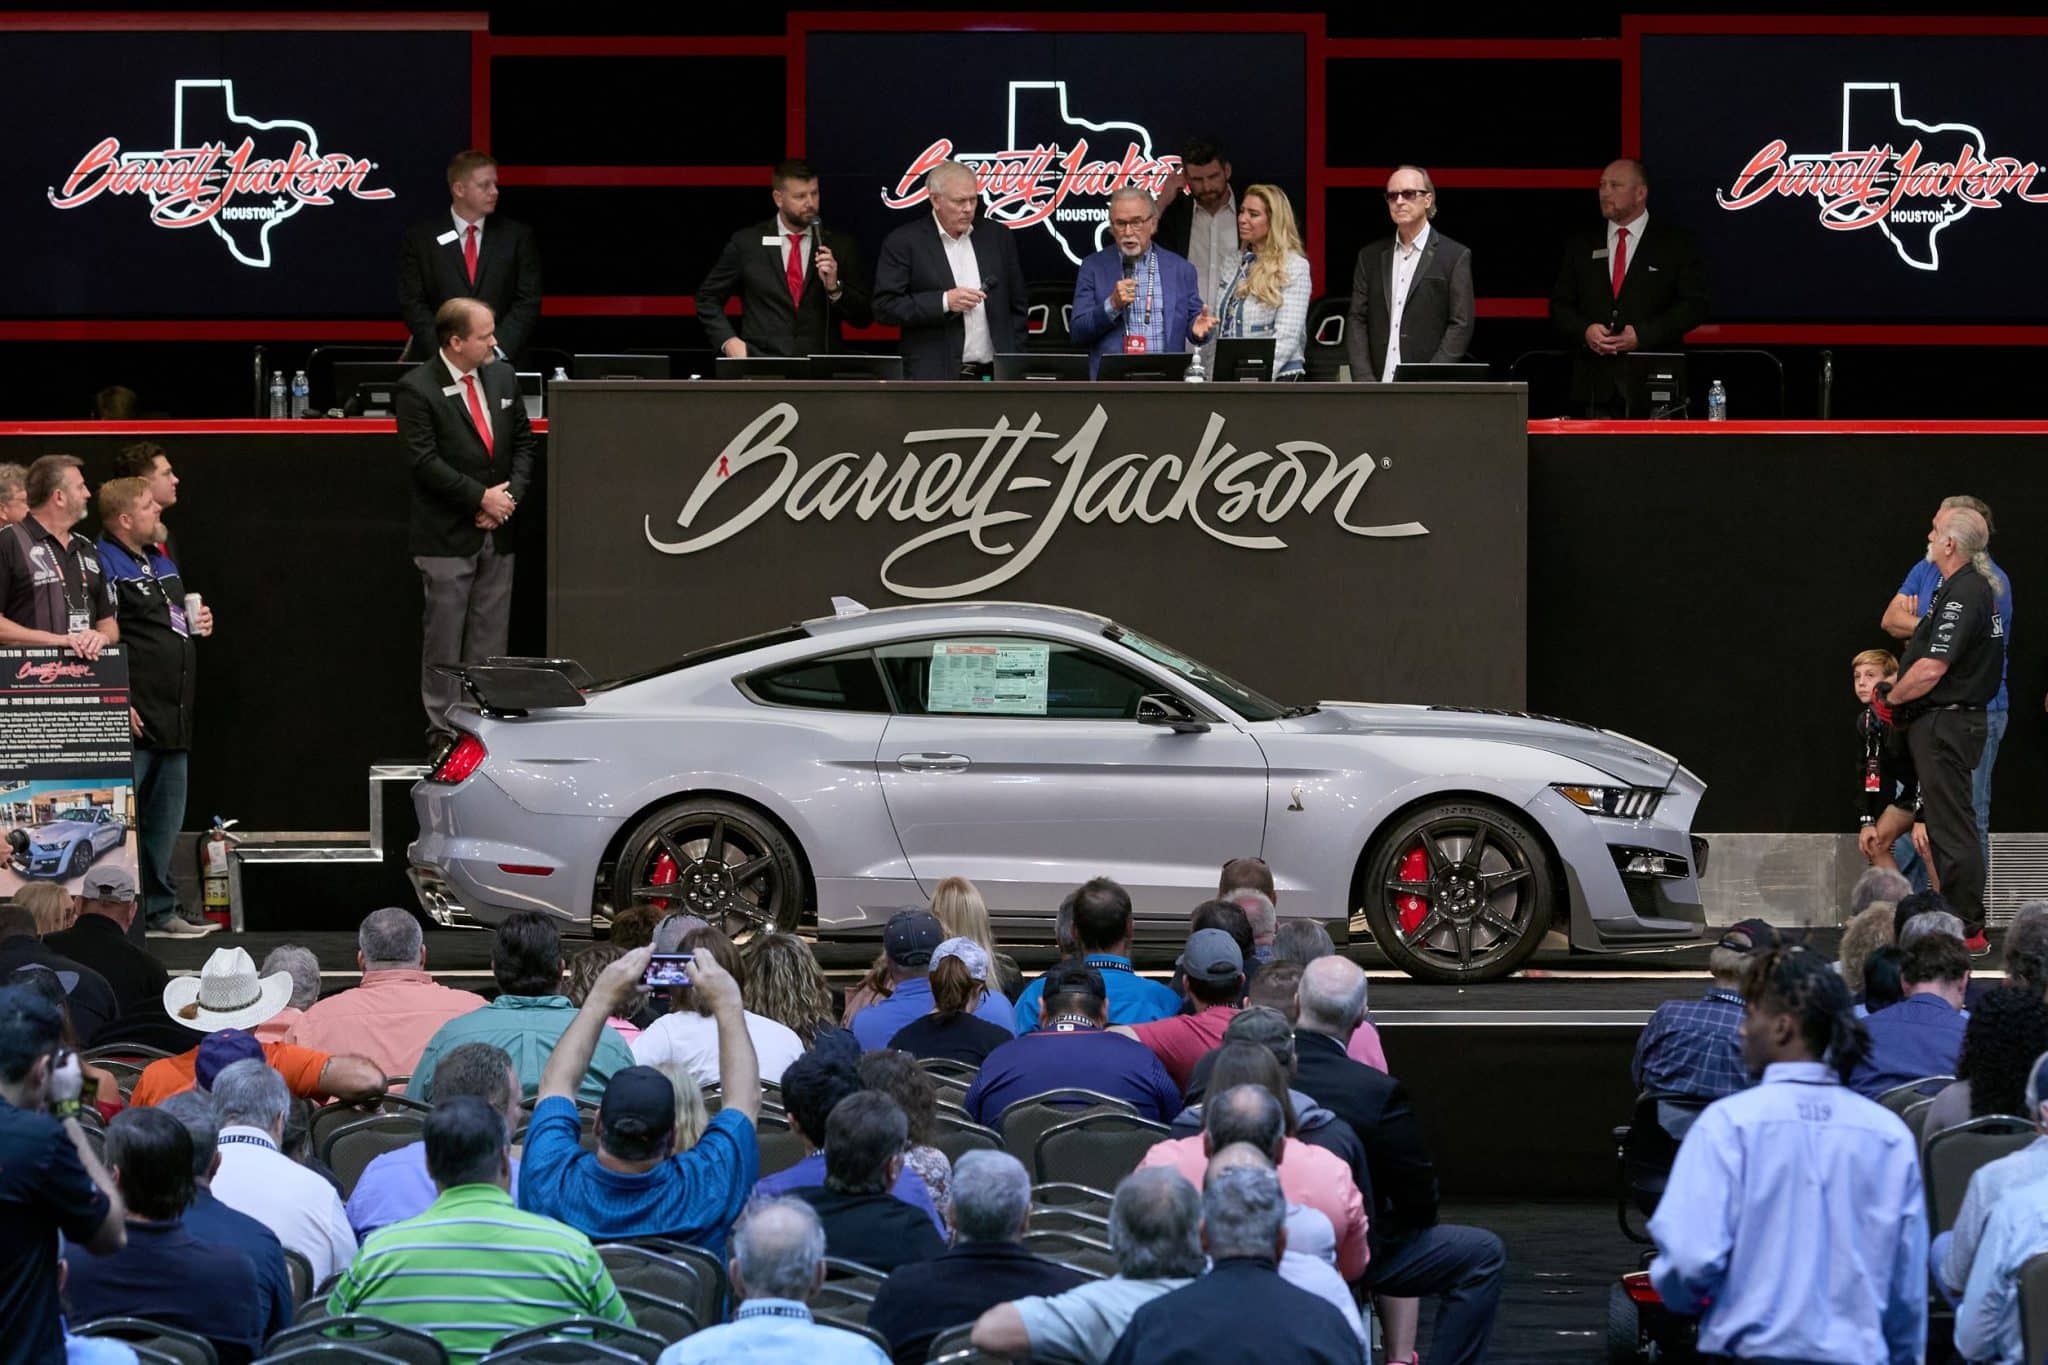 BarrettJackson’s 2022 Houston Auction Surpasses 31.4 Million in Total